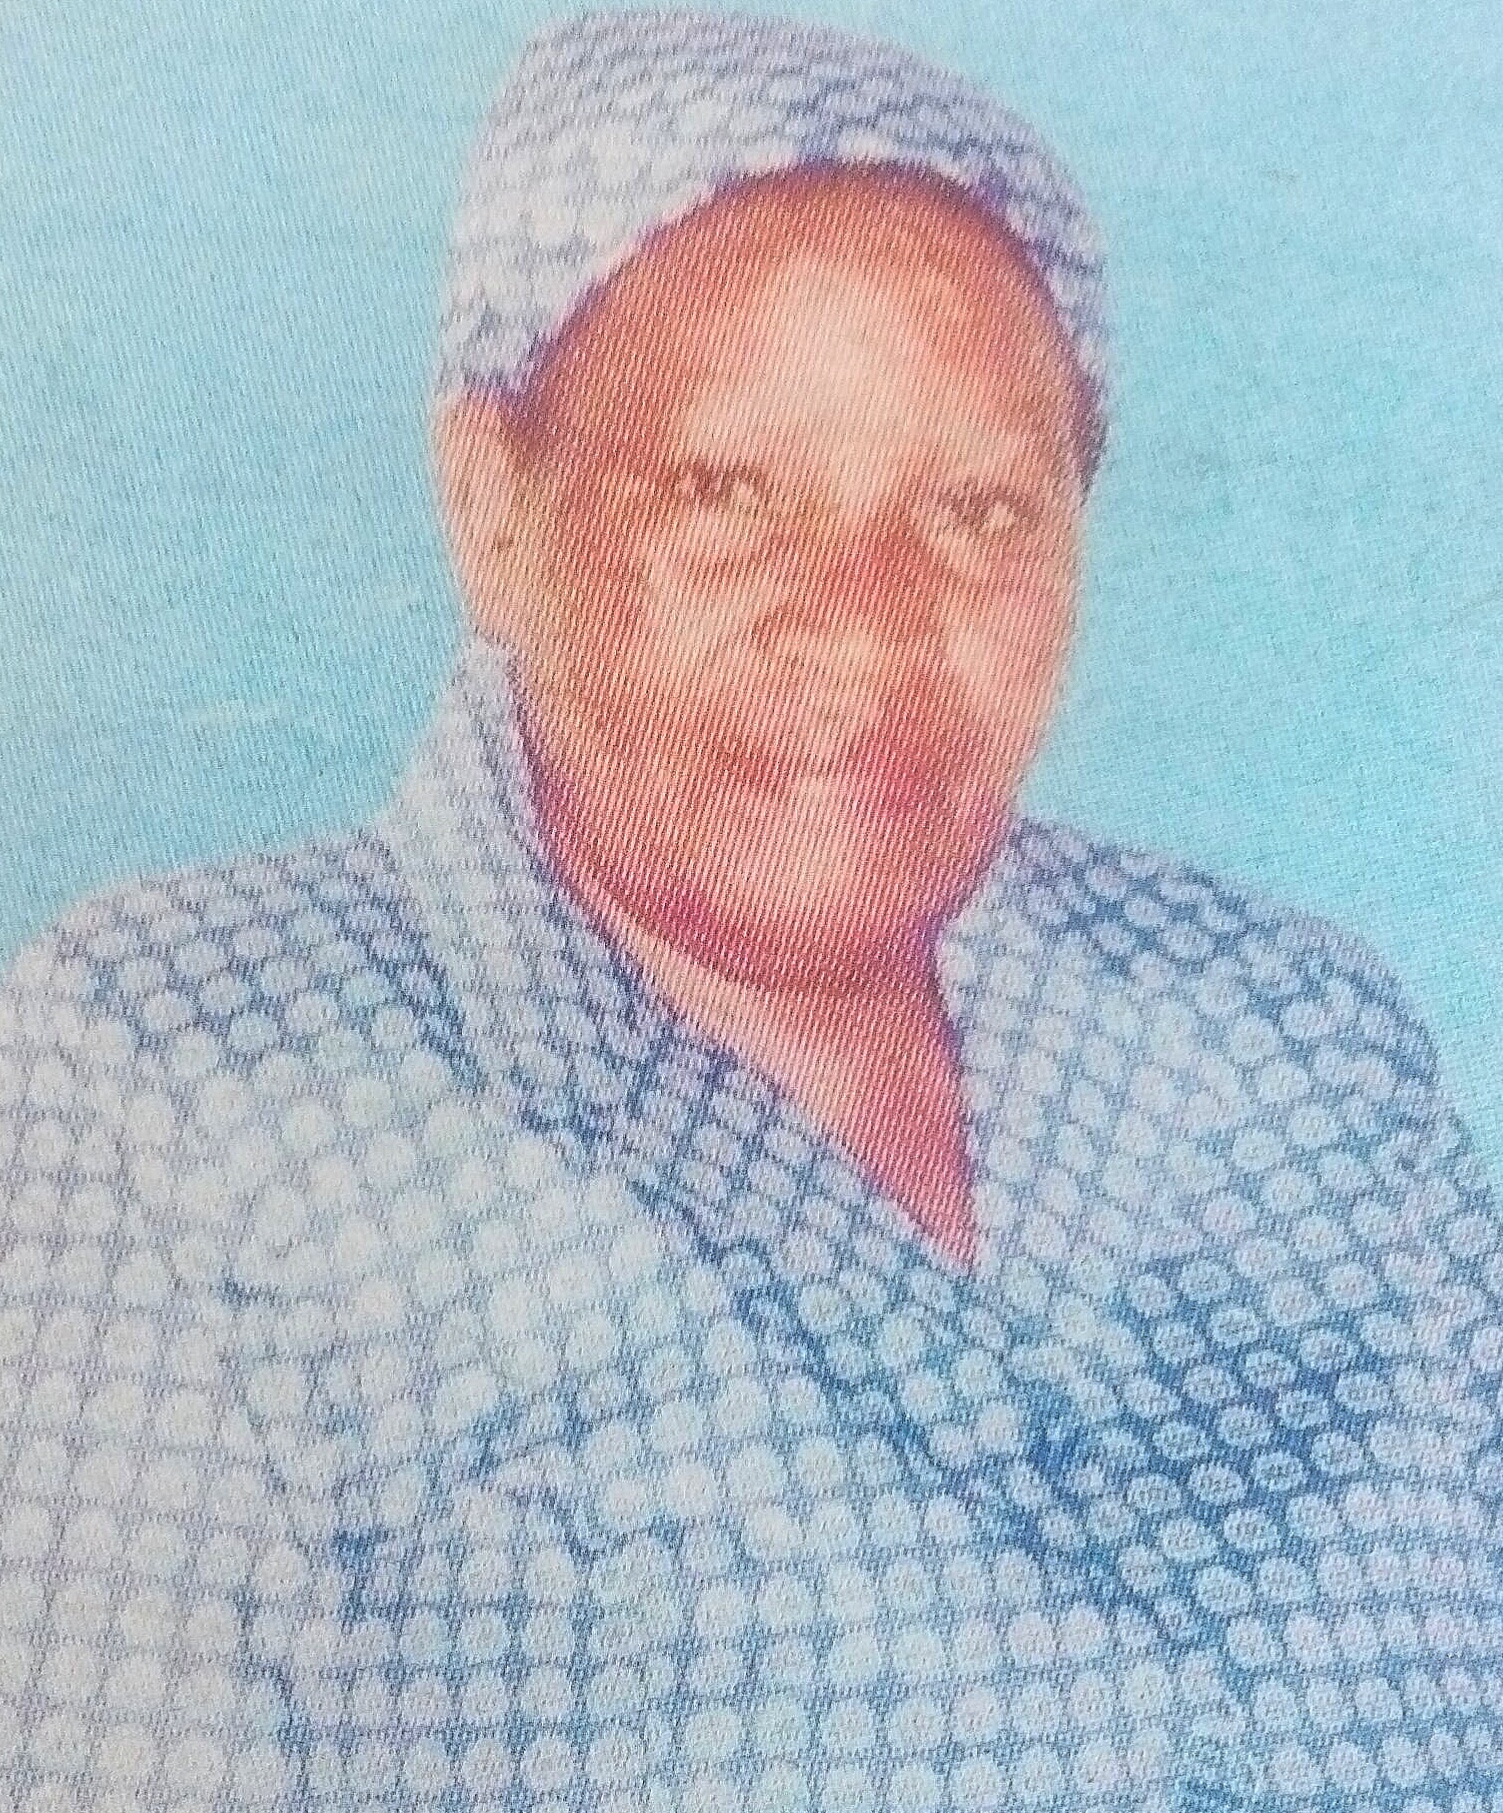 Obituary Image of Annah Gathoni Kamau